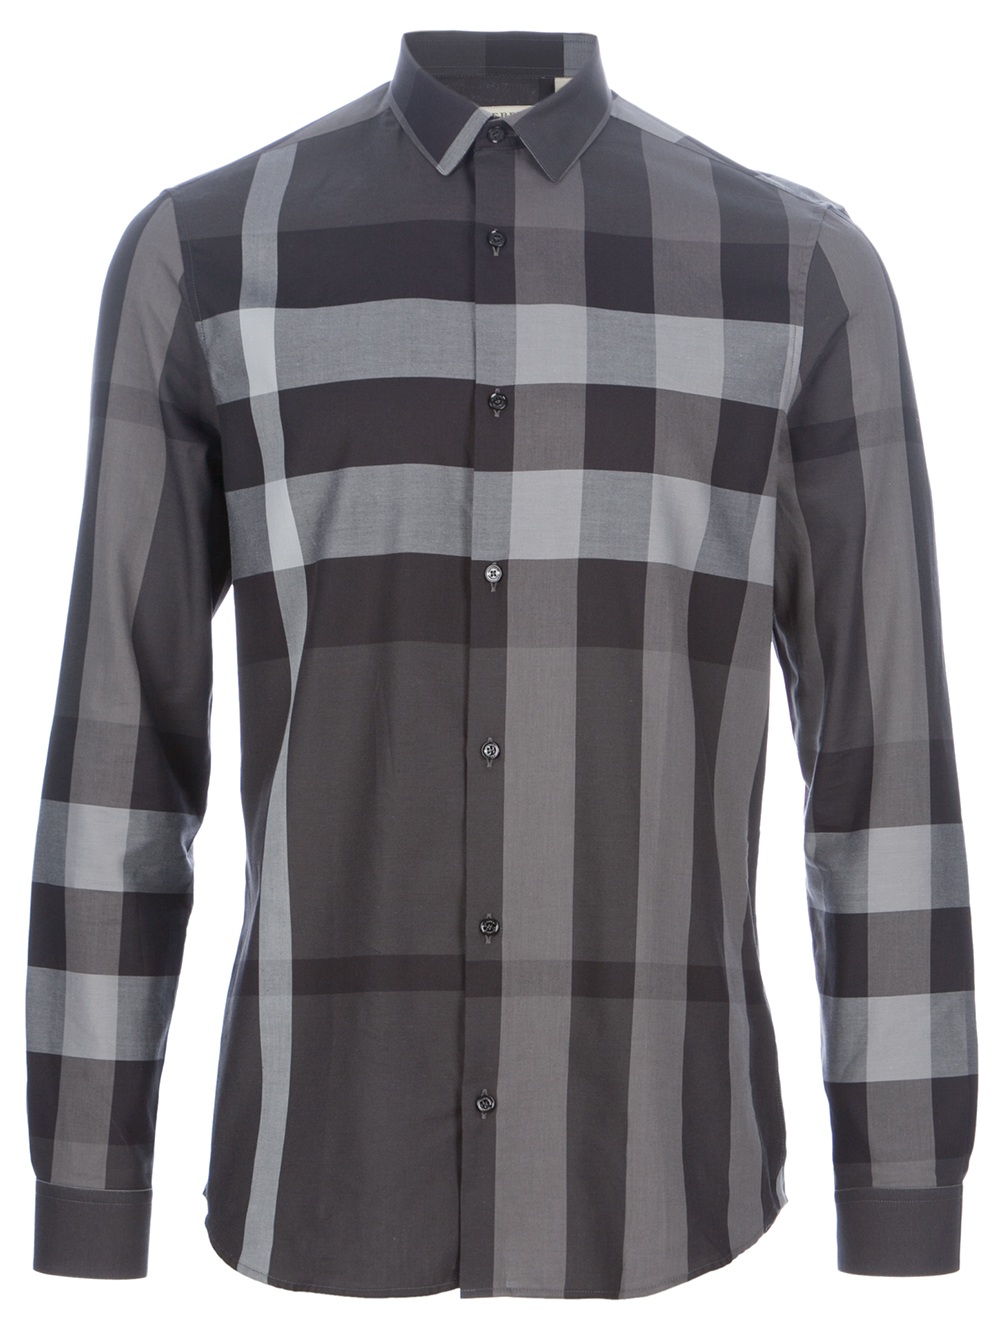 Burberry Pembury Check Shirt in Grey (Gray) for Men - Lyst